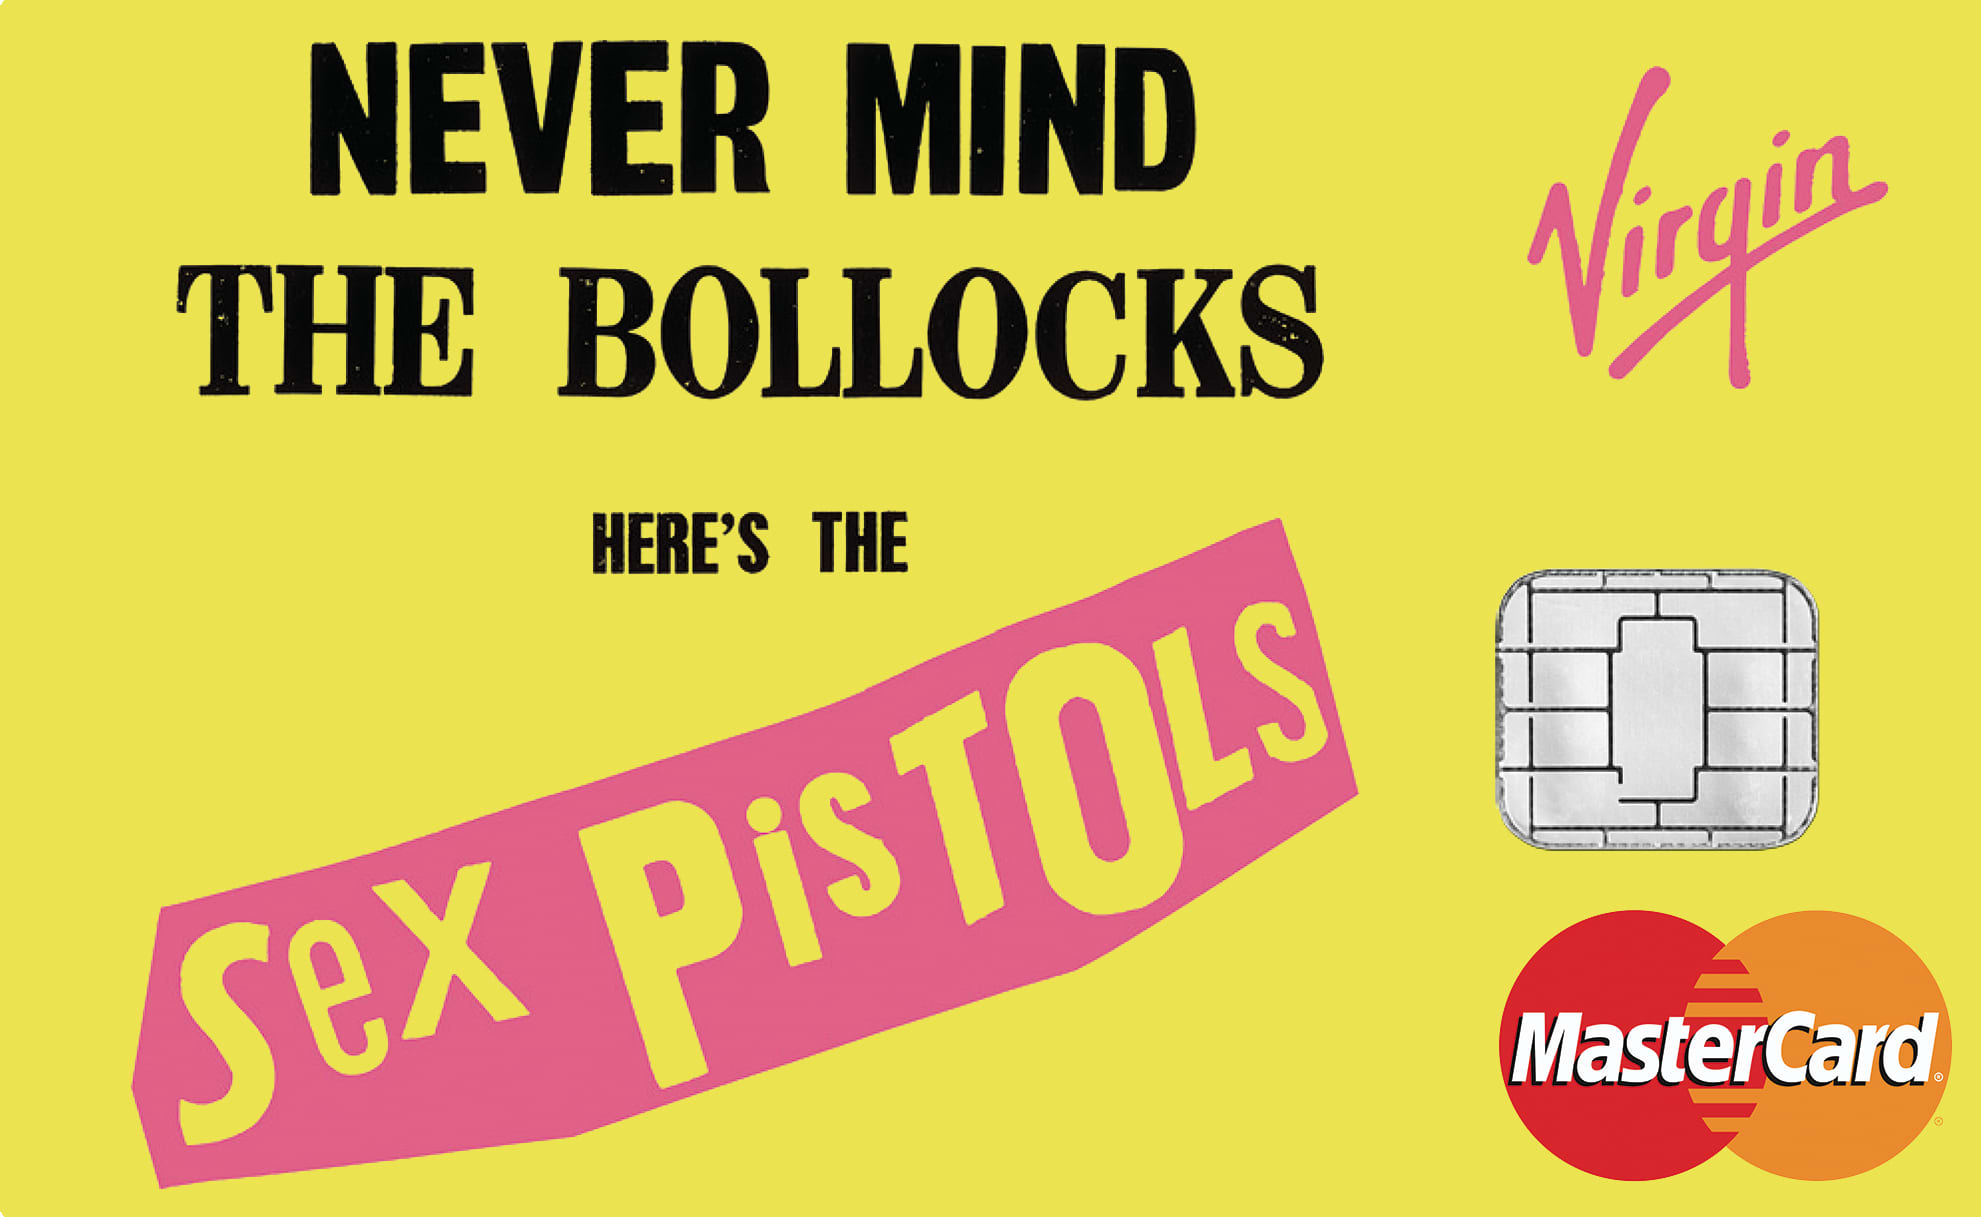 Sex Pistols Credit Card Deal With Virgin Money Slammed - 